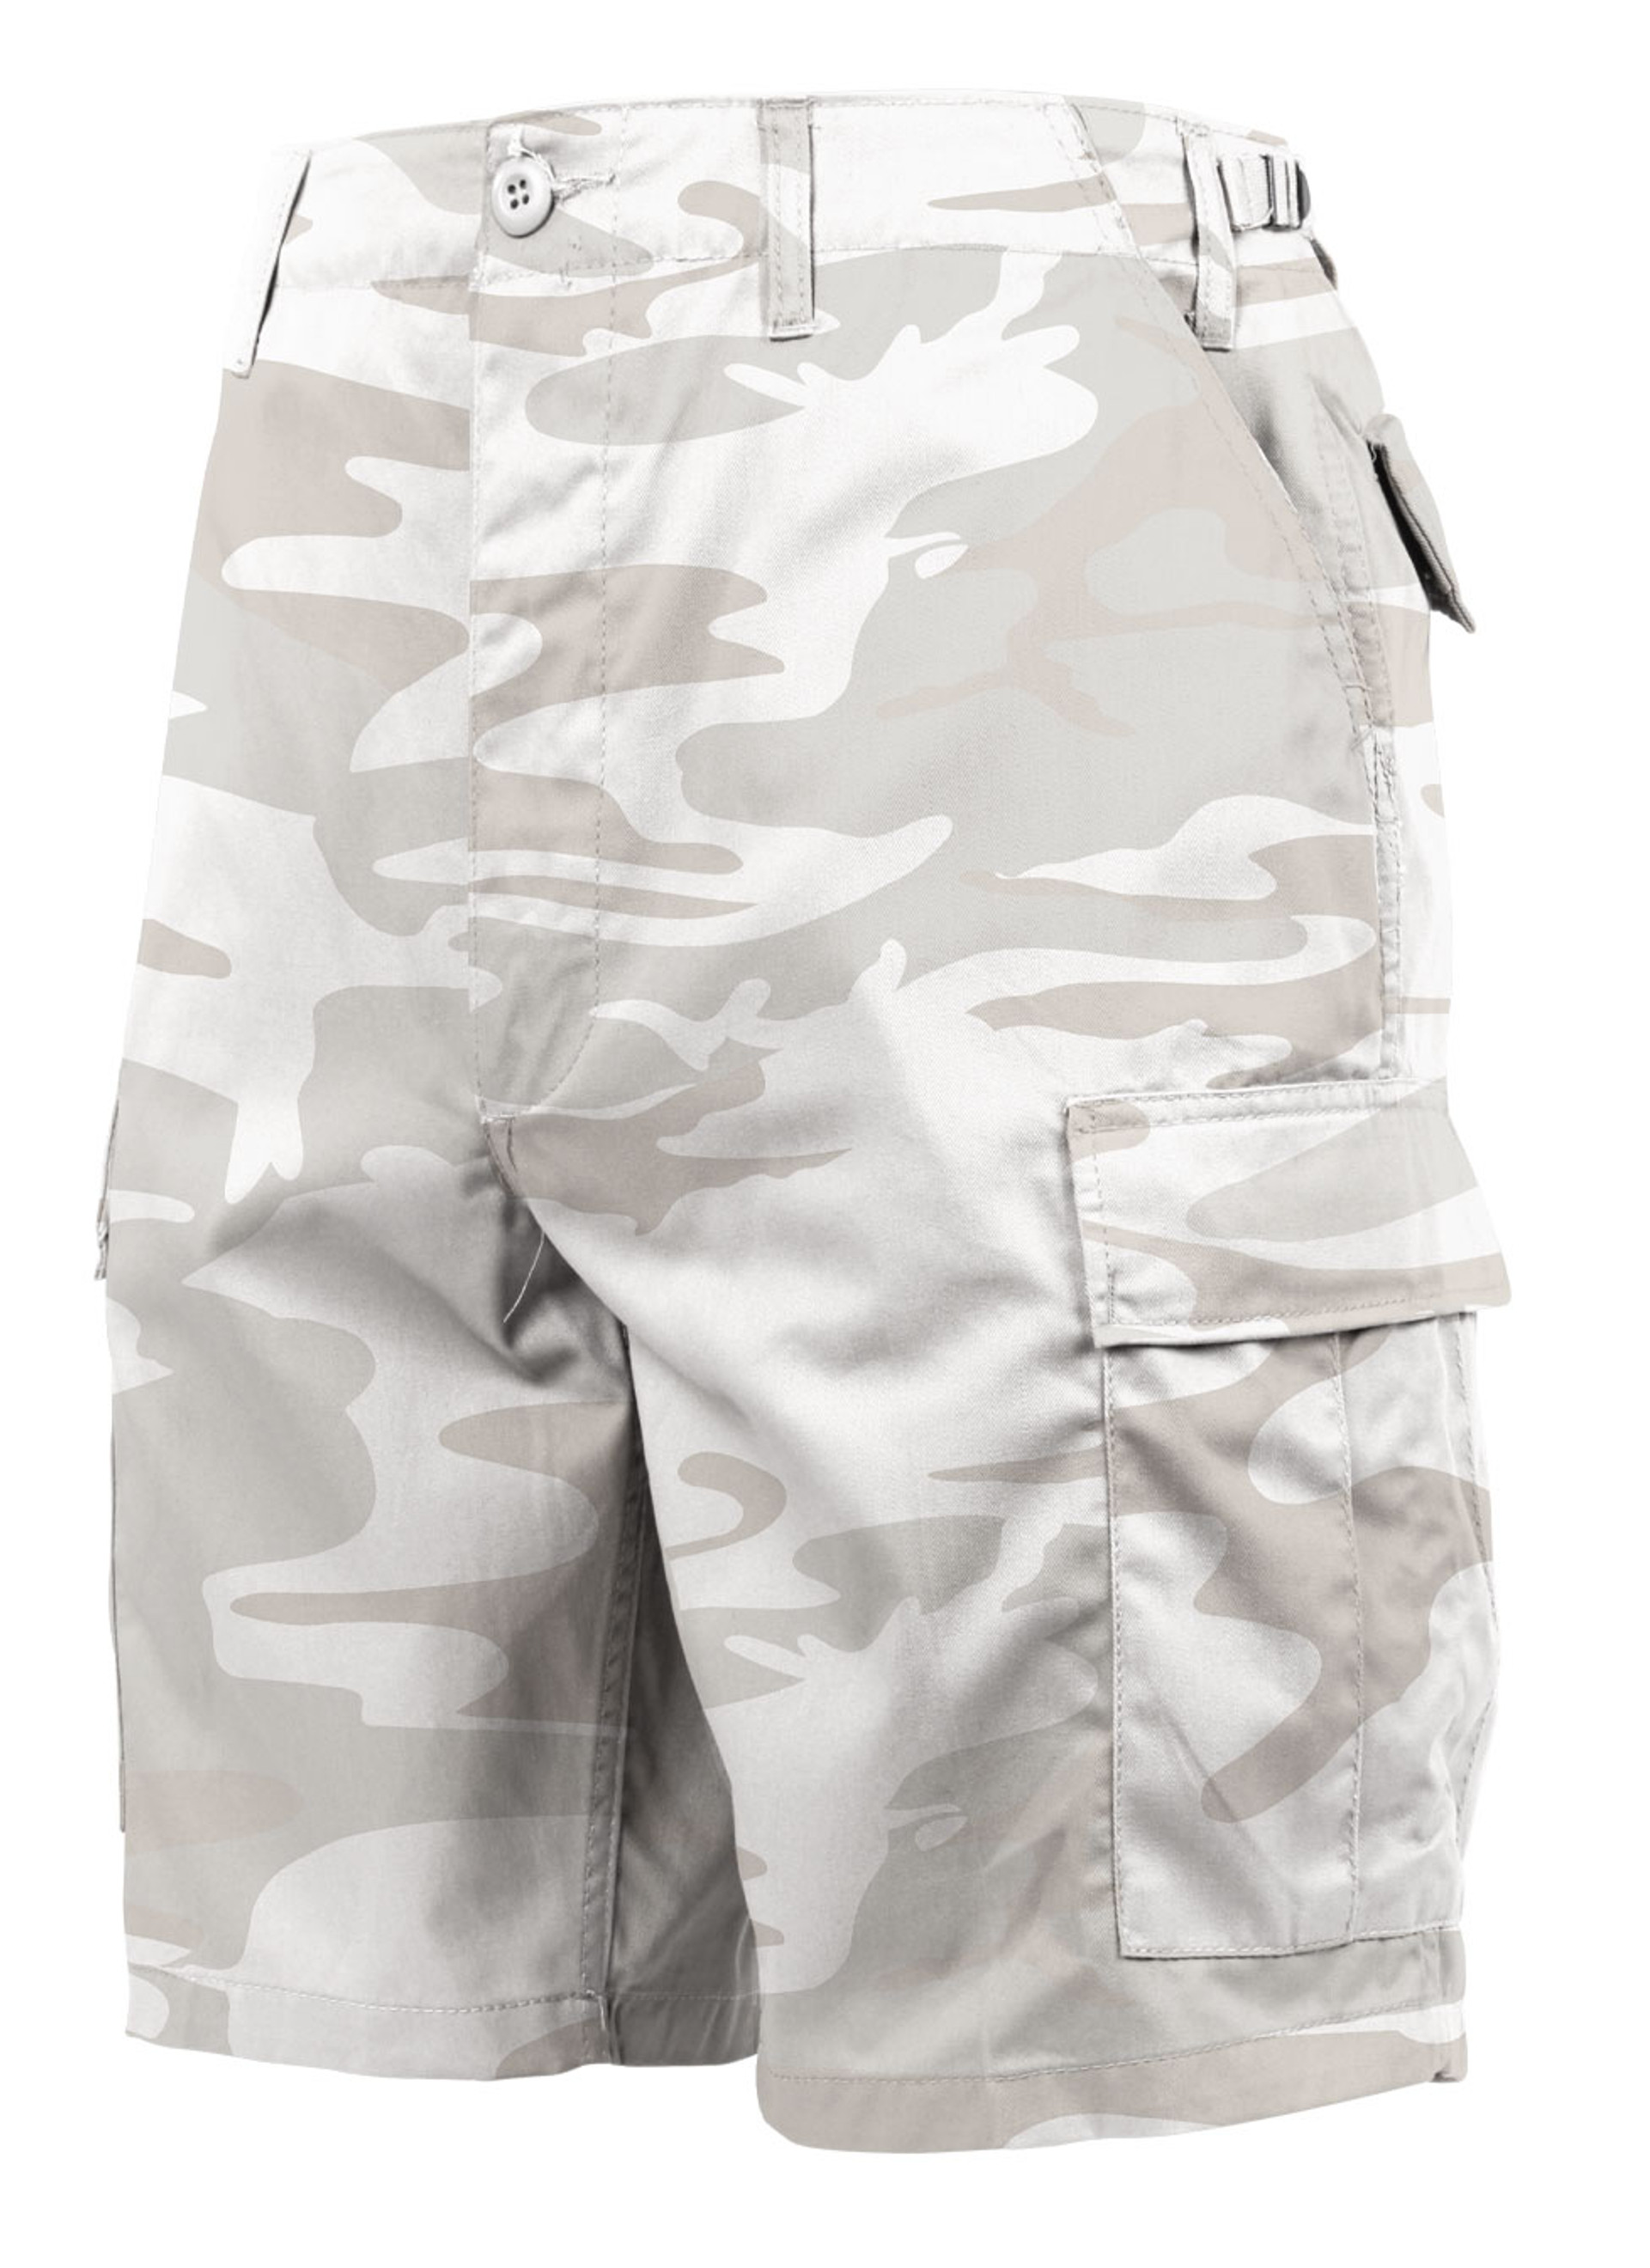 Rothco Colored Camo BDU Shorts - White Camo